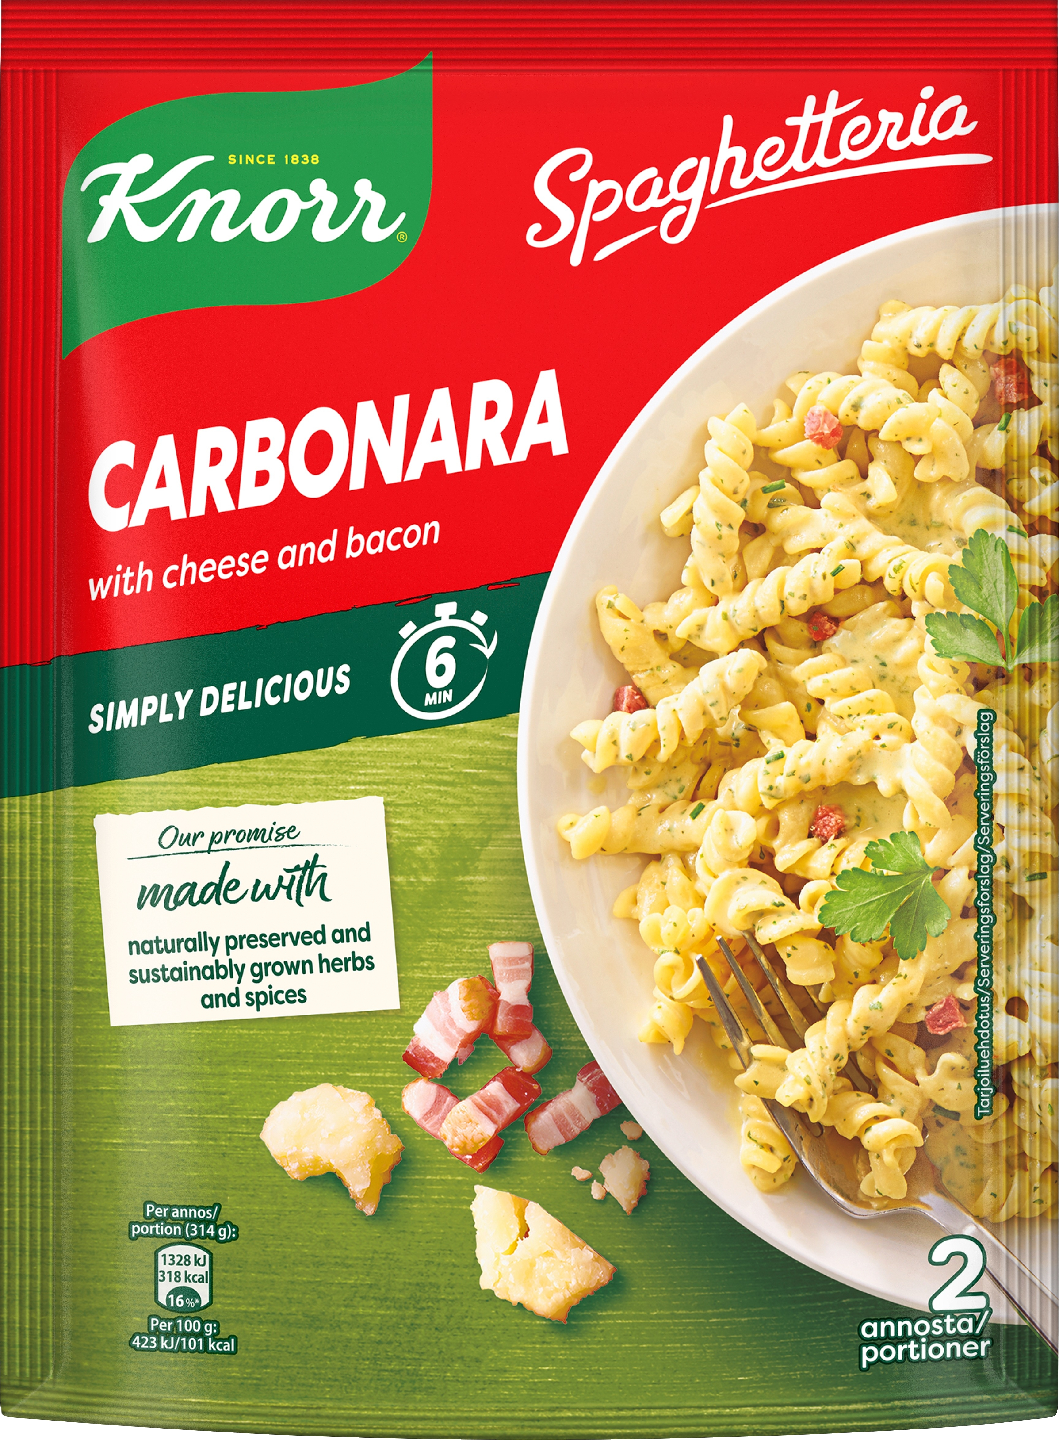 Knorr Spaghetteria 154g carbonara — HoReCa-tukku Kespro